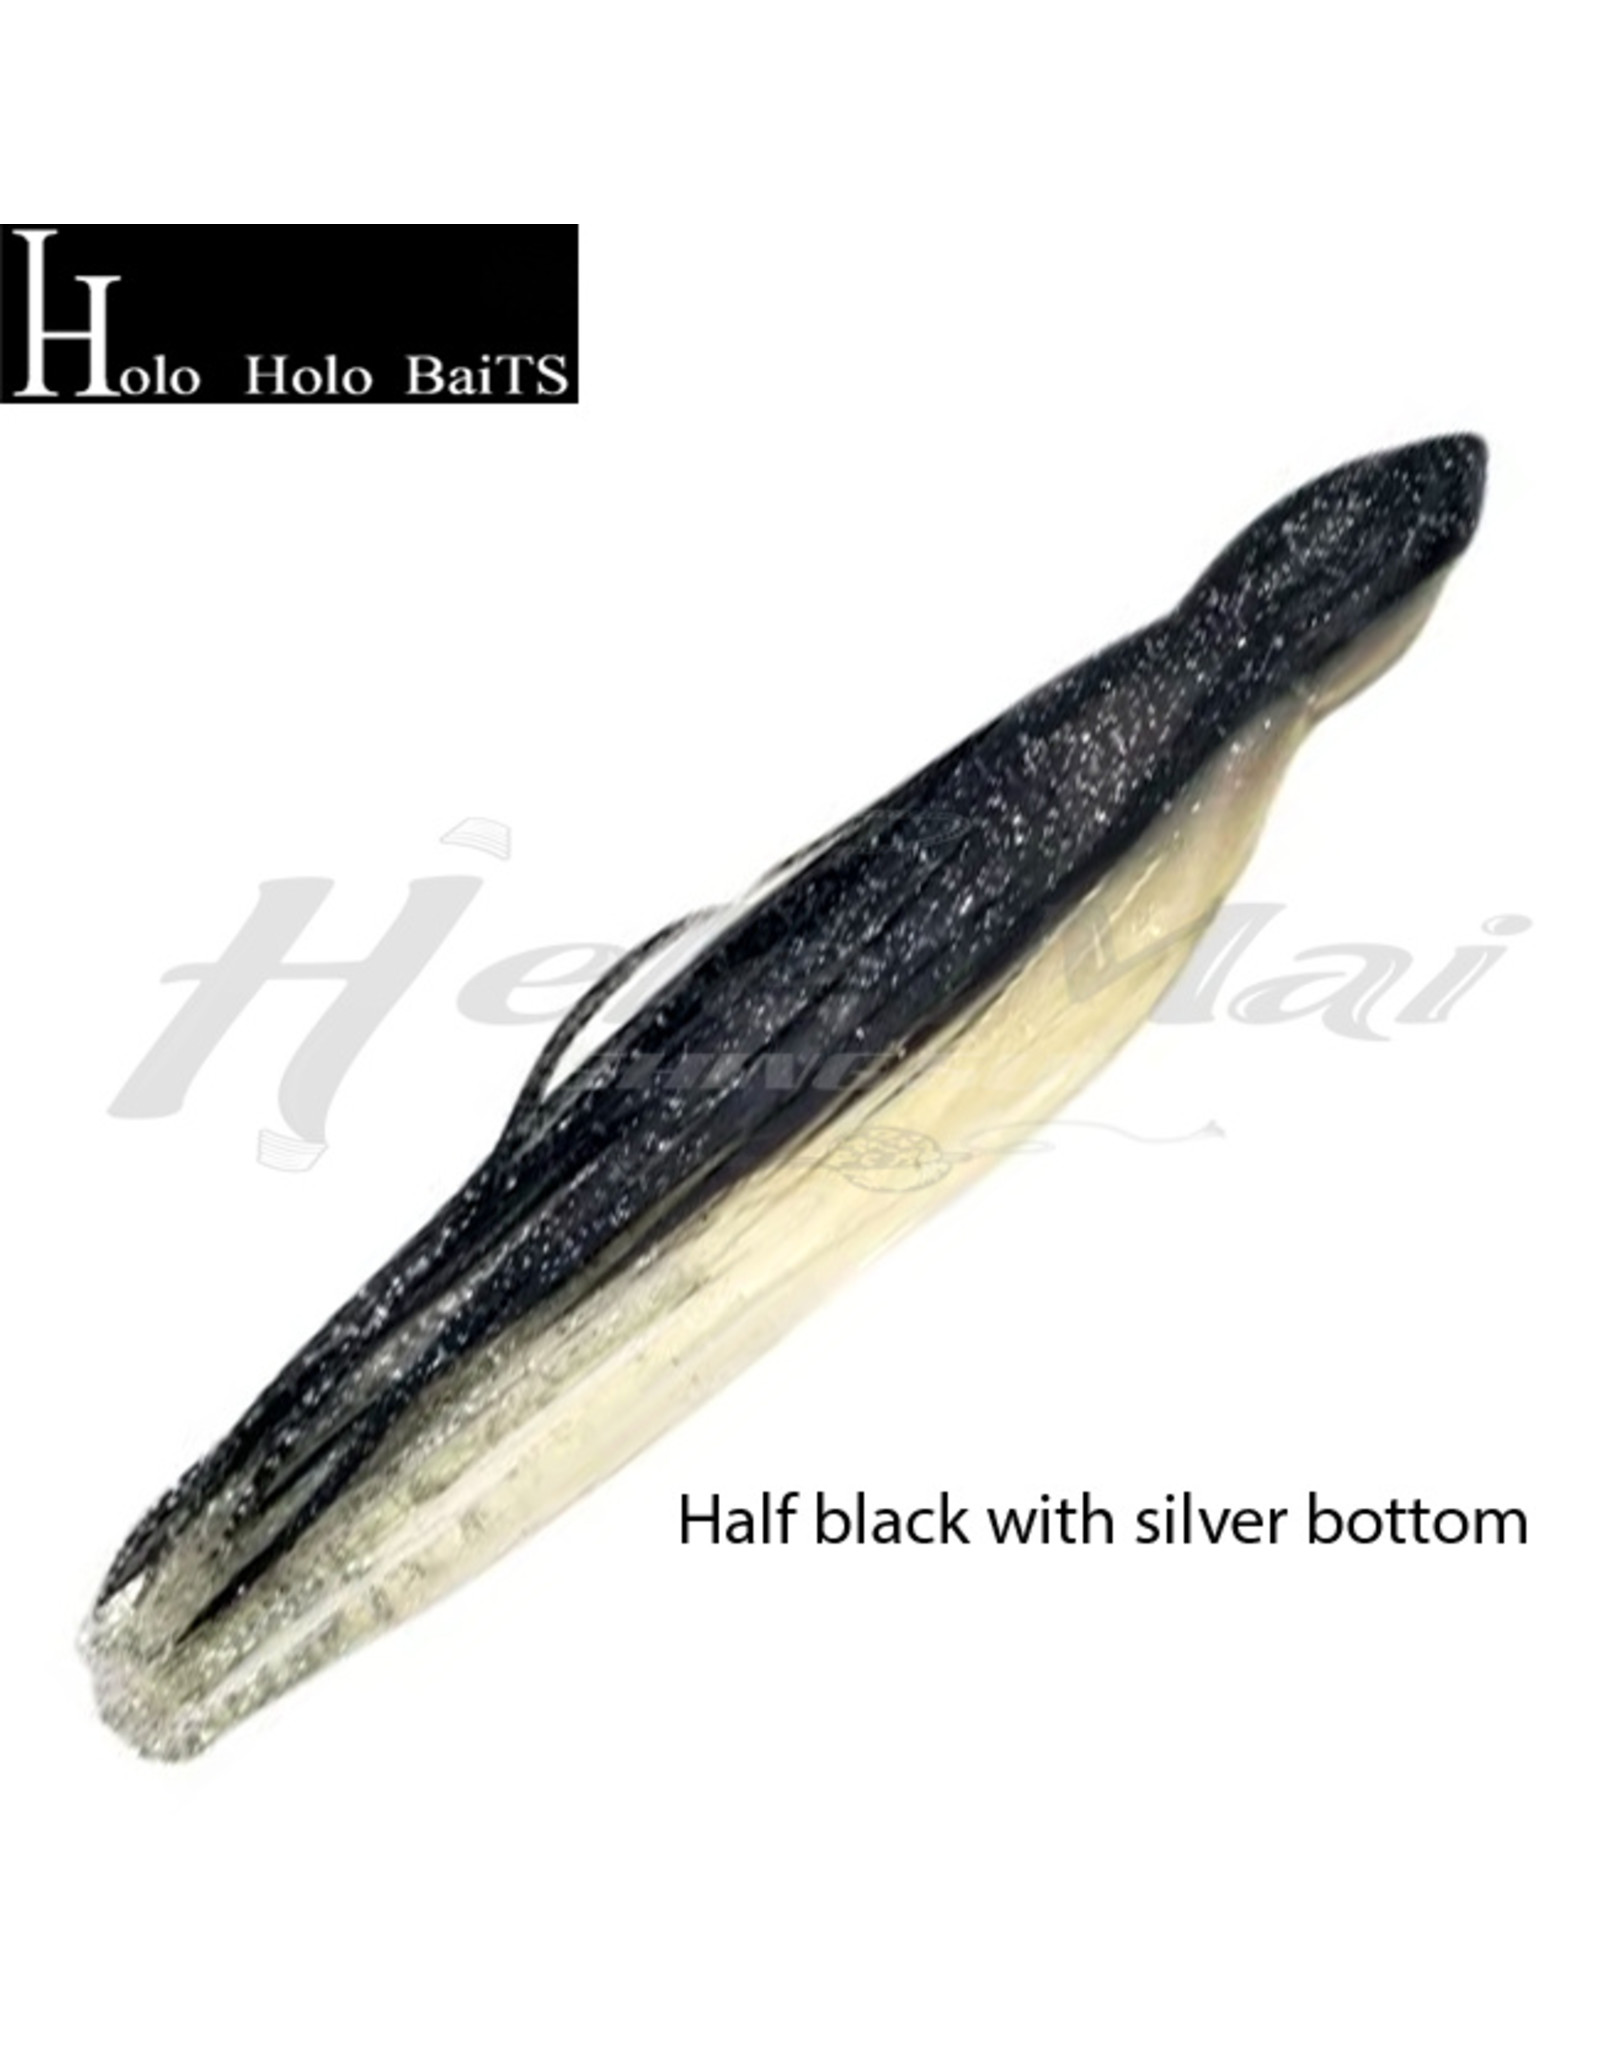 HOLO HOLO HAWAII (HHH) HH, 7" SQUID SKIRT BLACK SILVER GLITTER 0629